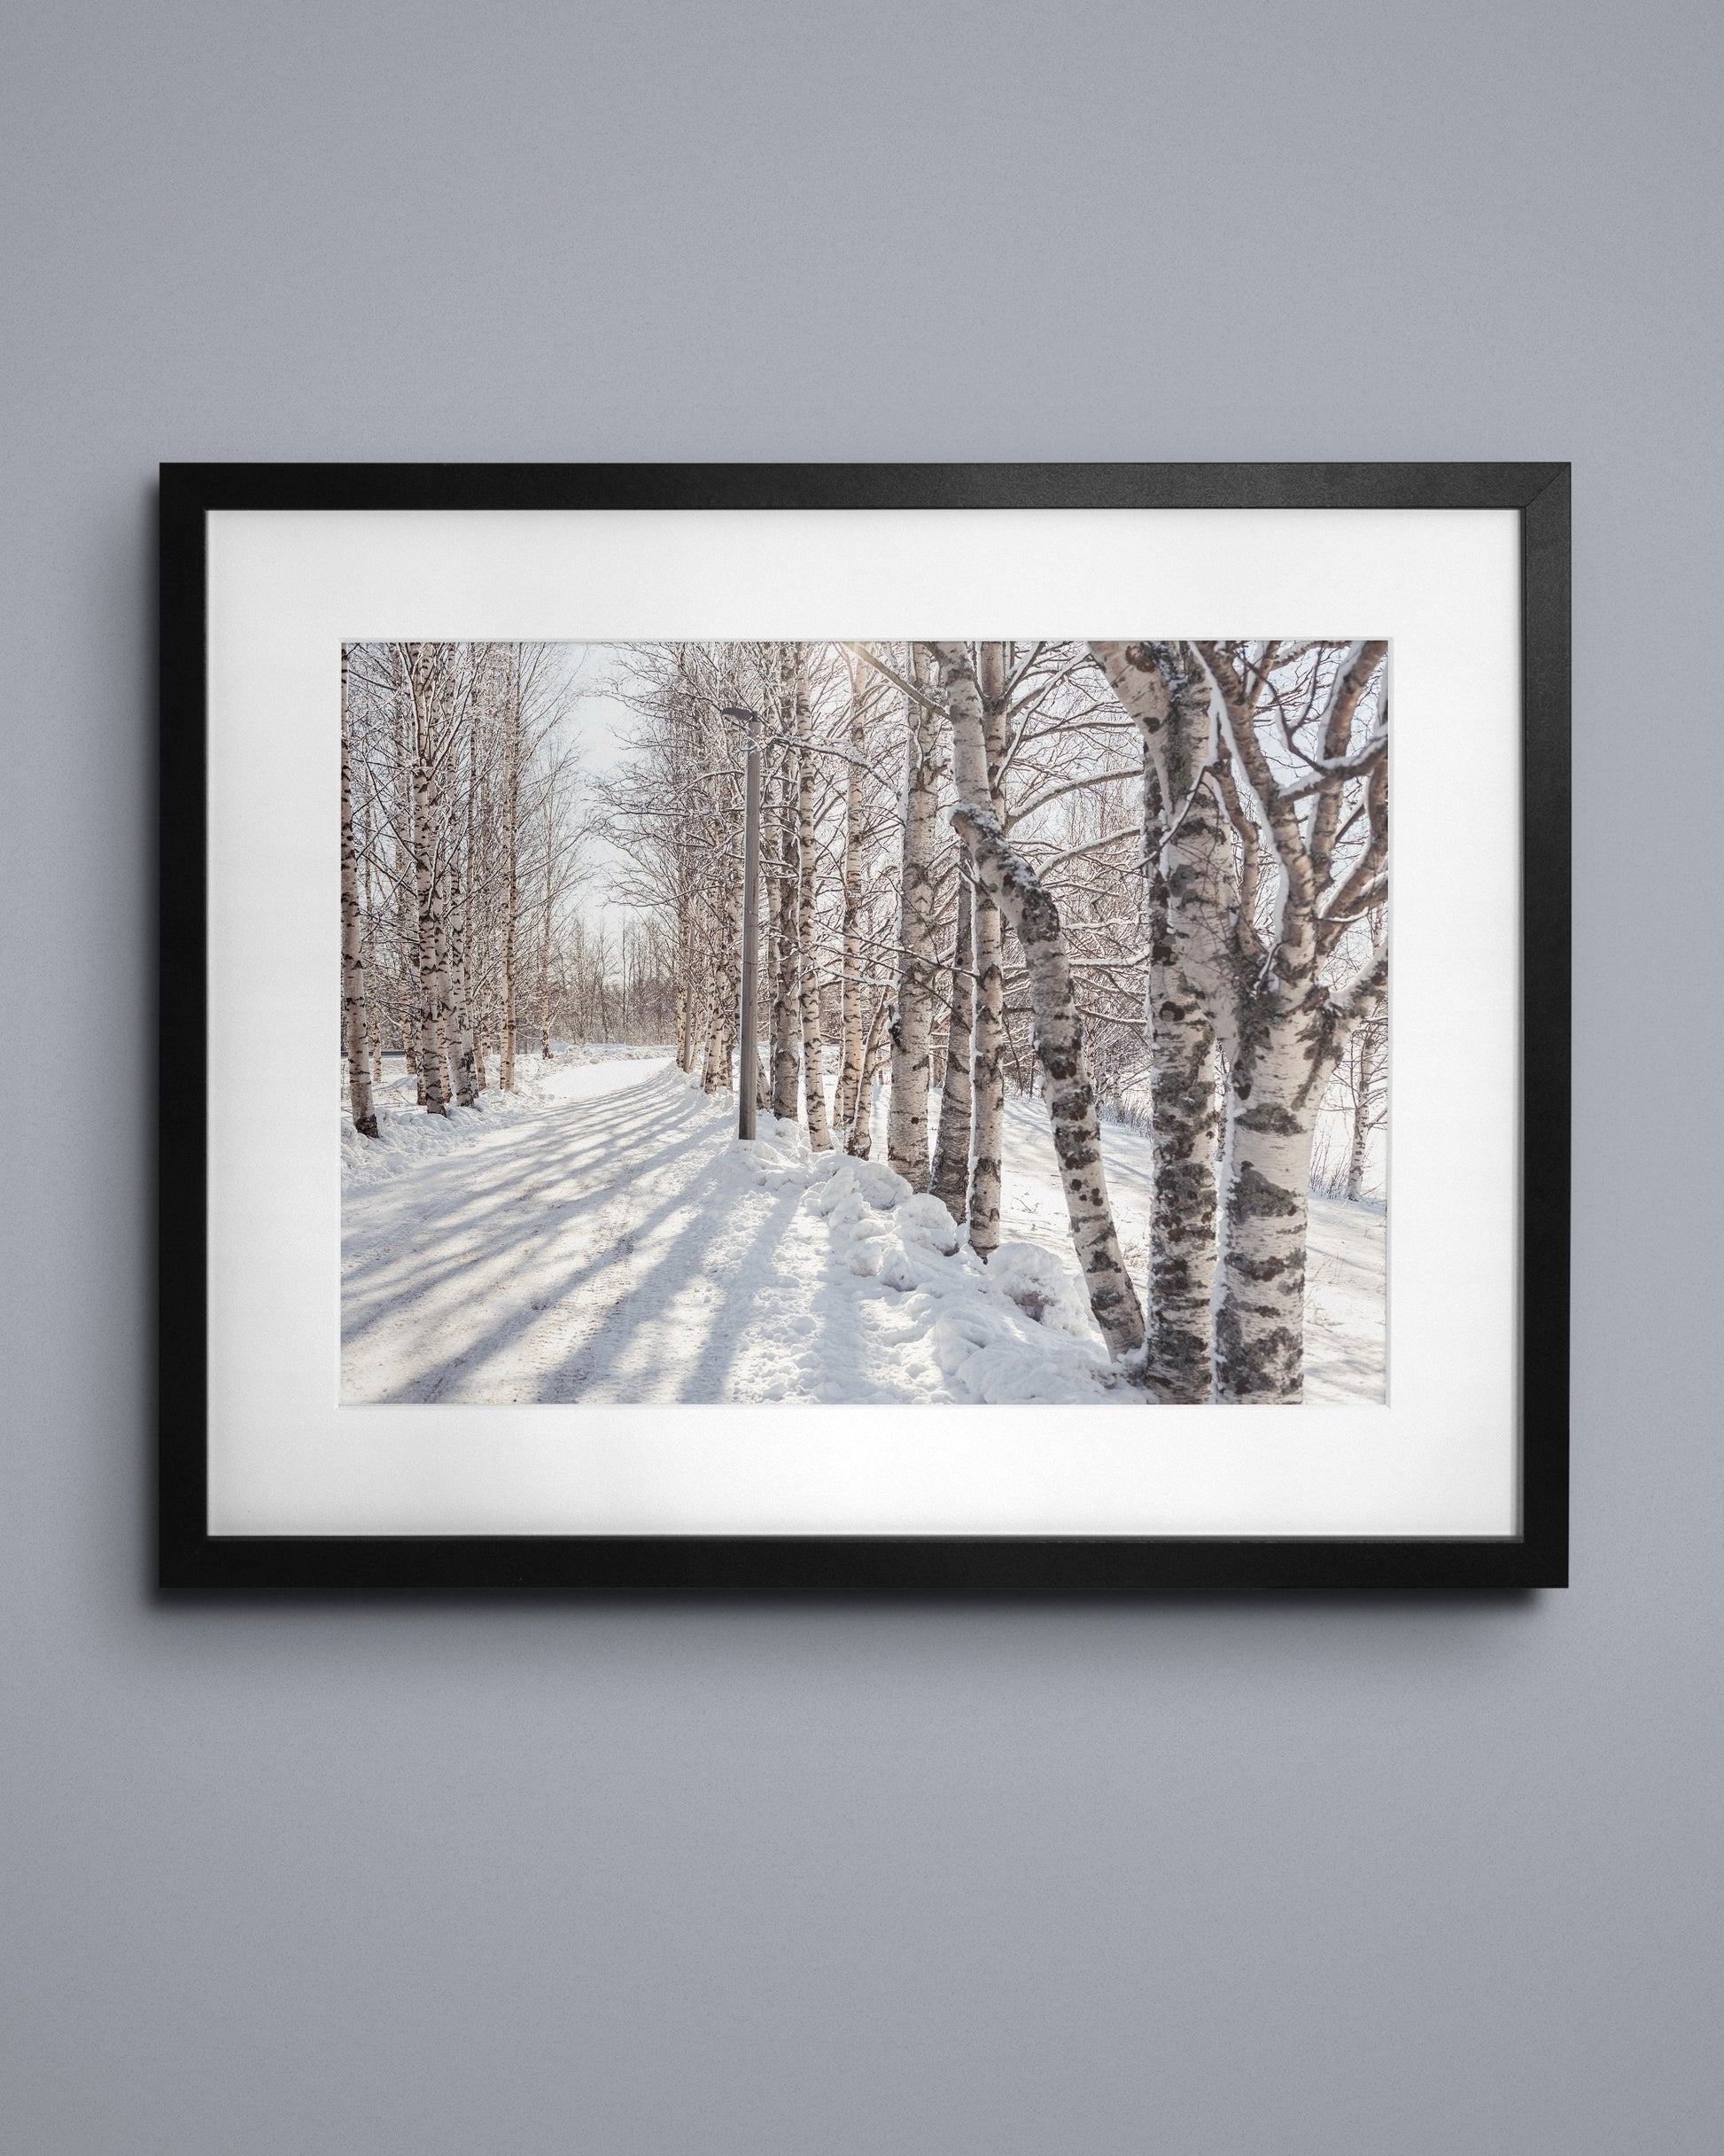 Fine-art print called Winter walk from Kaj on the wall